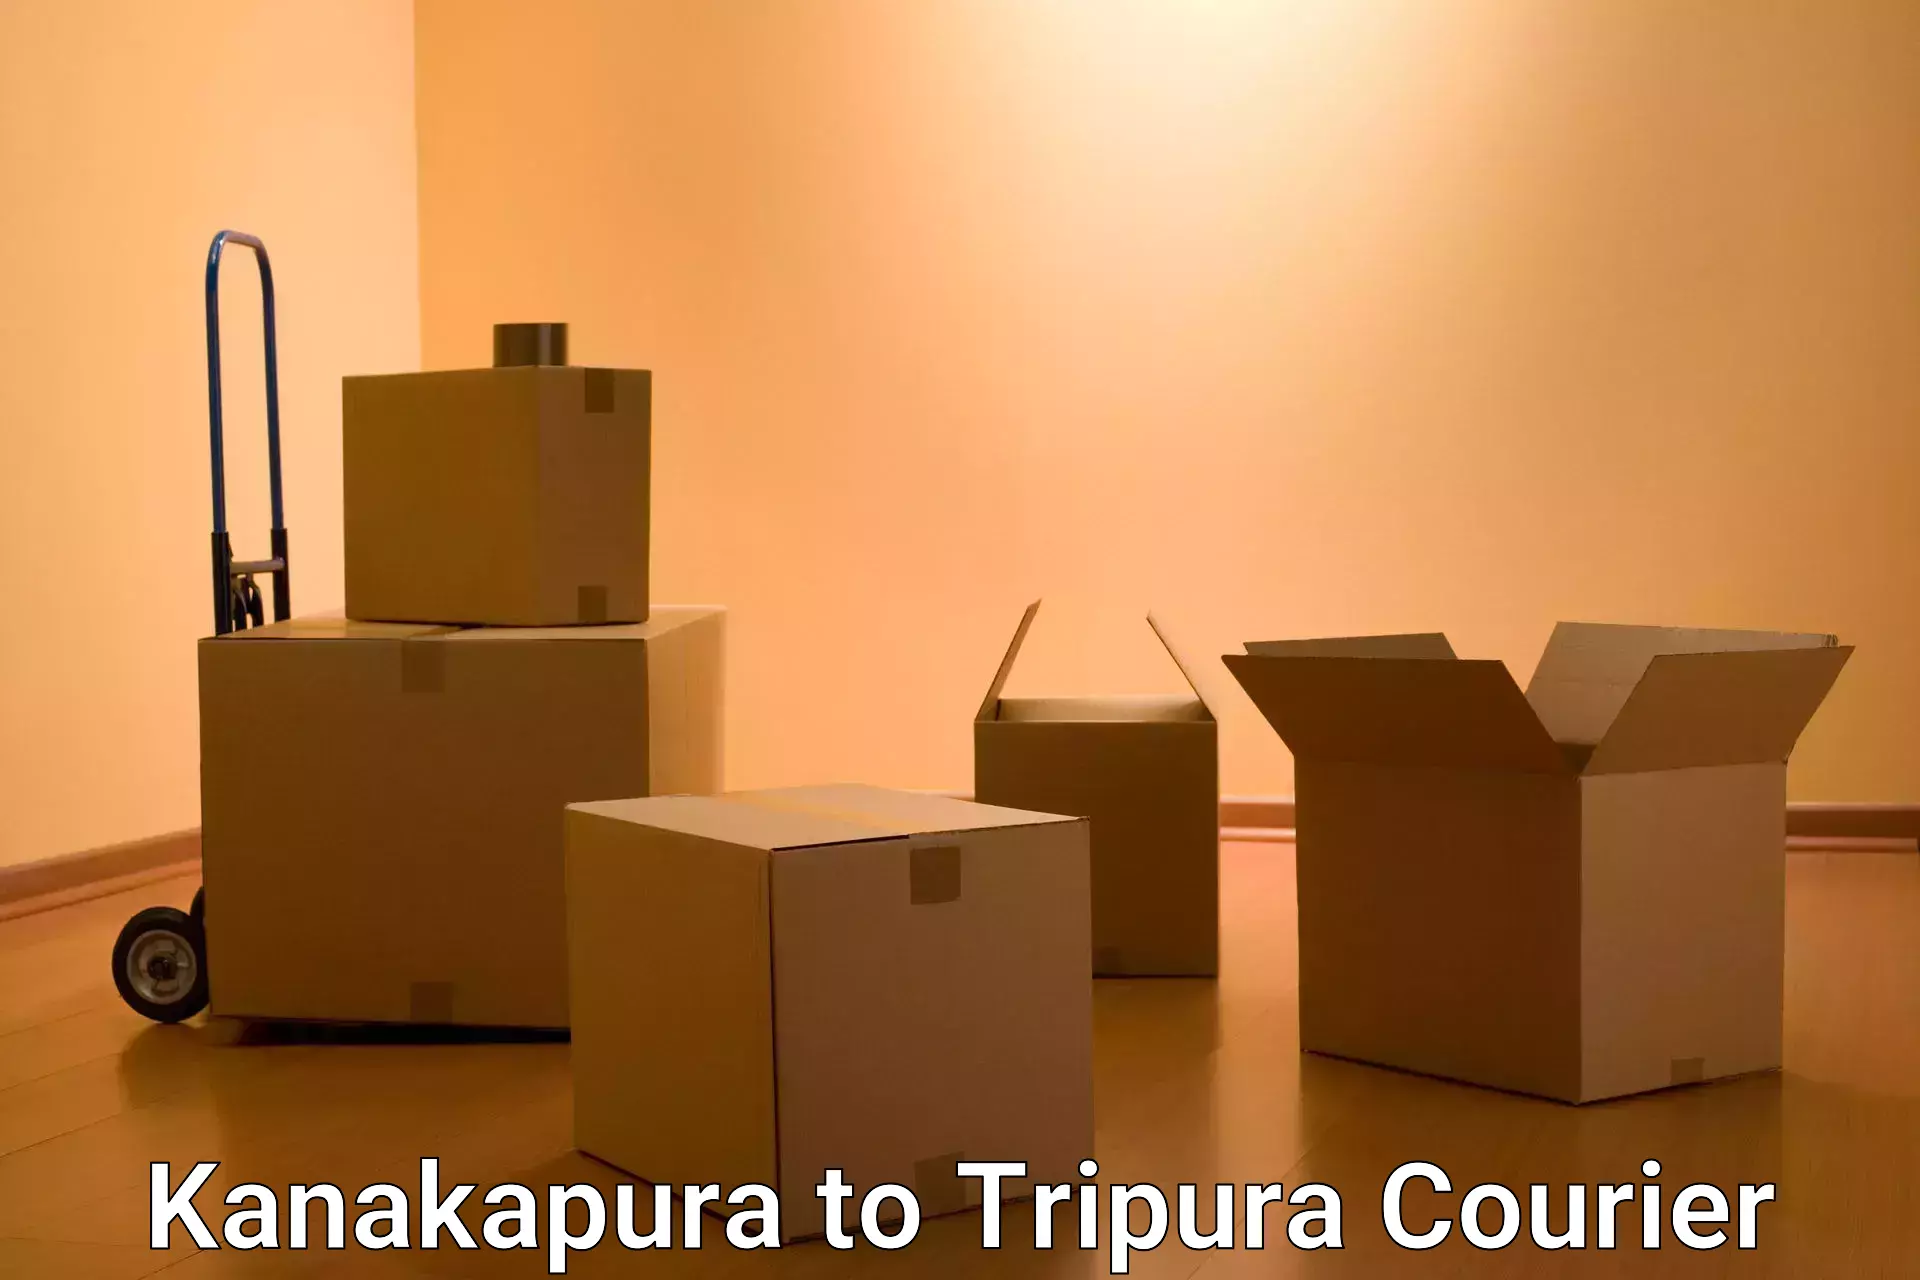 Cash on delivery service Kanakapura to Udaipur Tripura